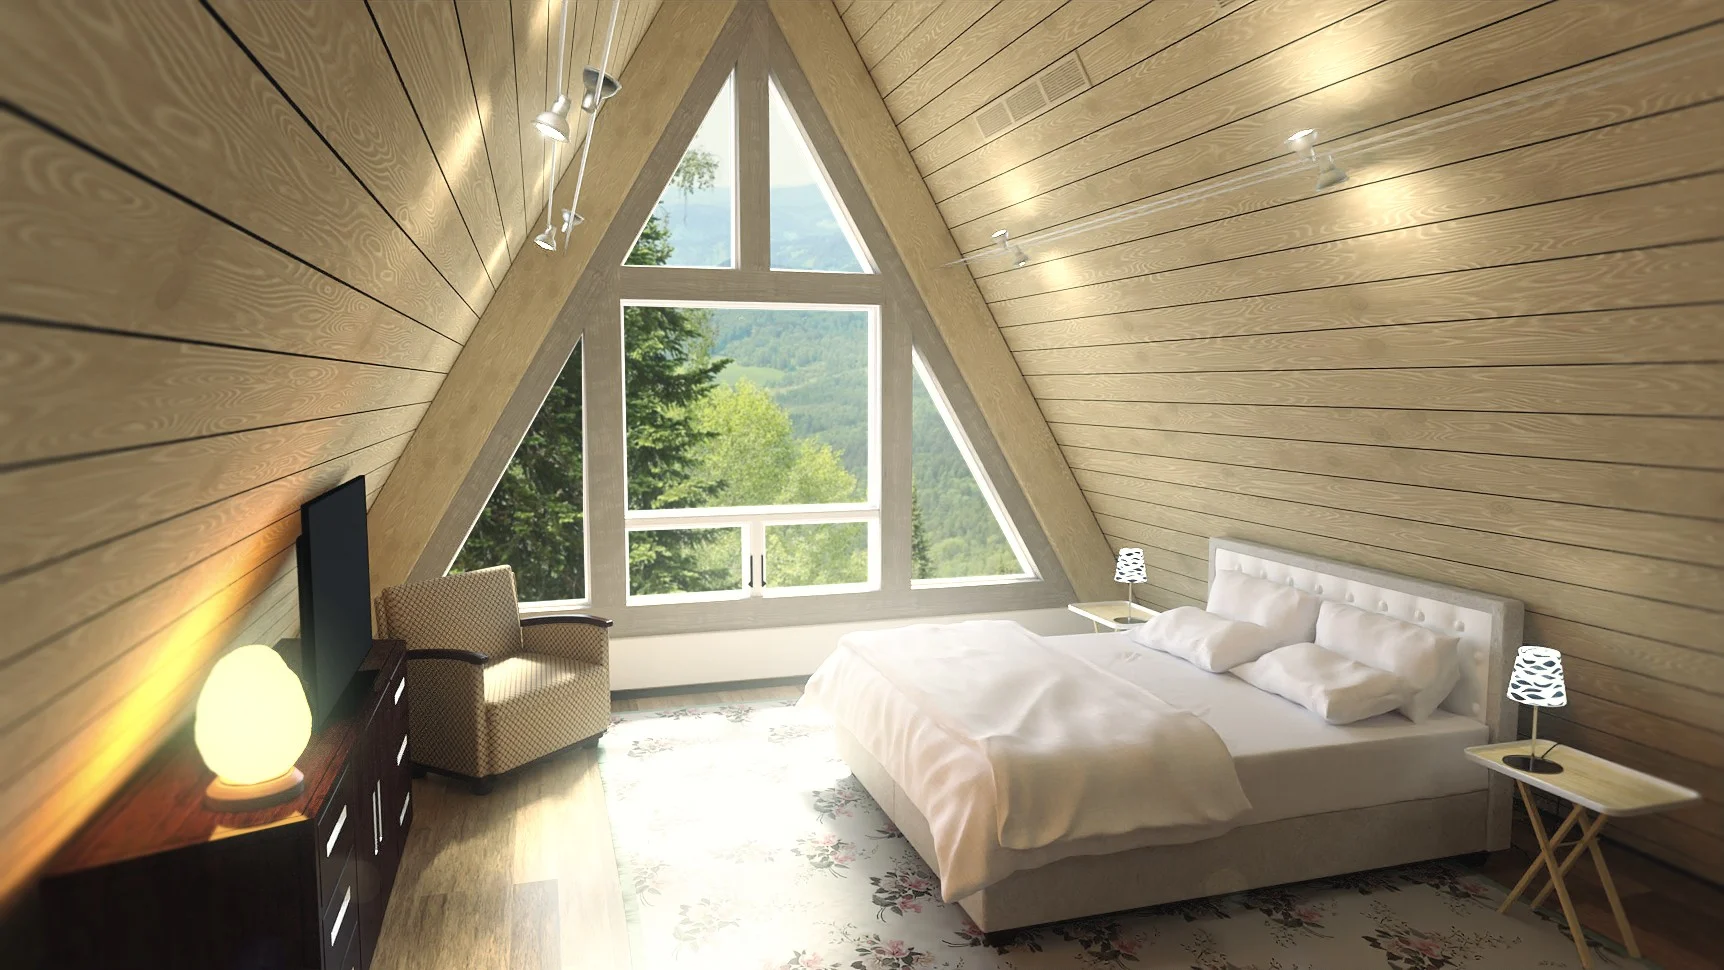 An attic bedroom window